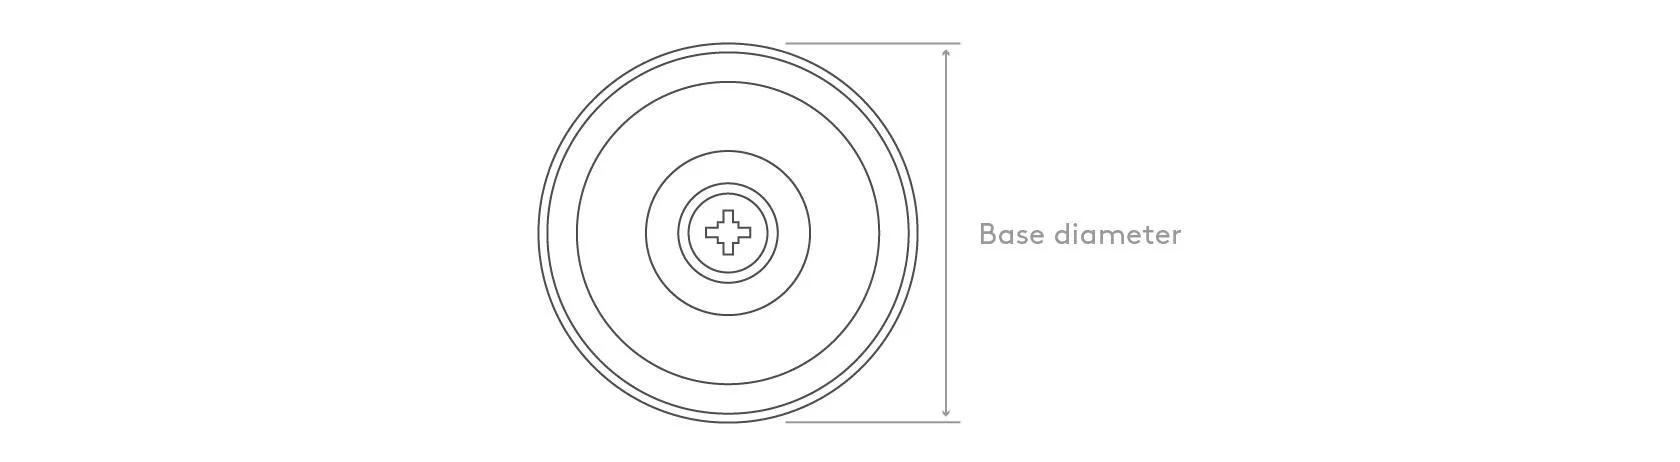 Base diameter